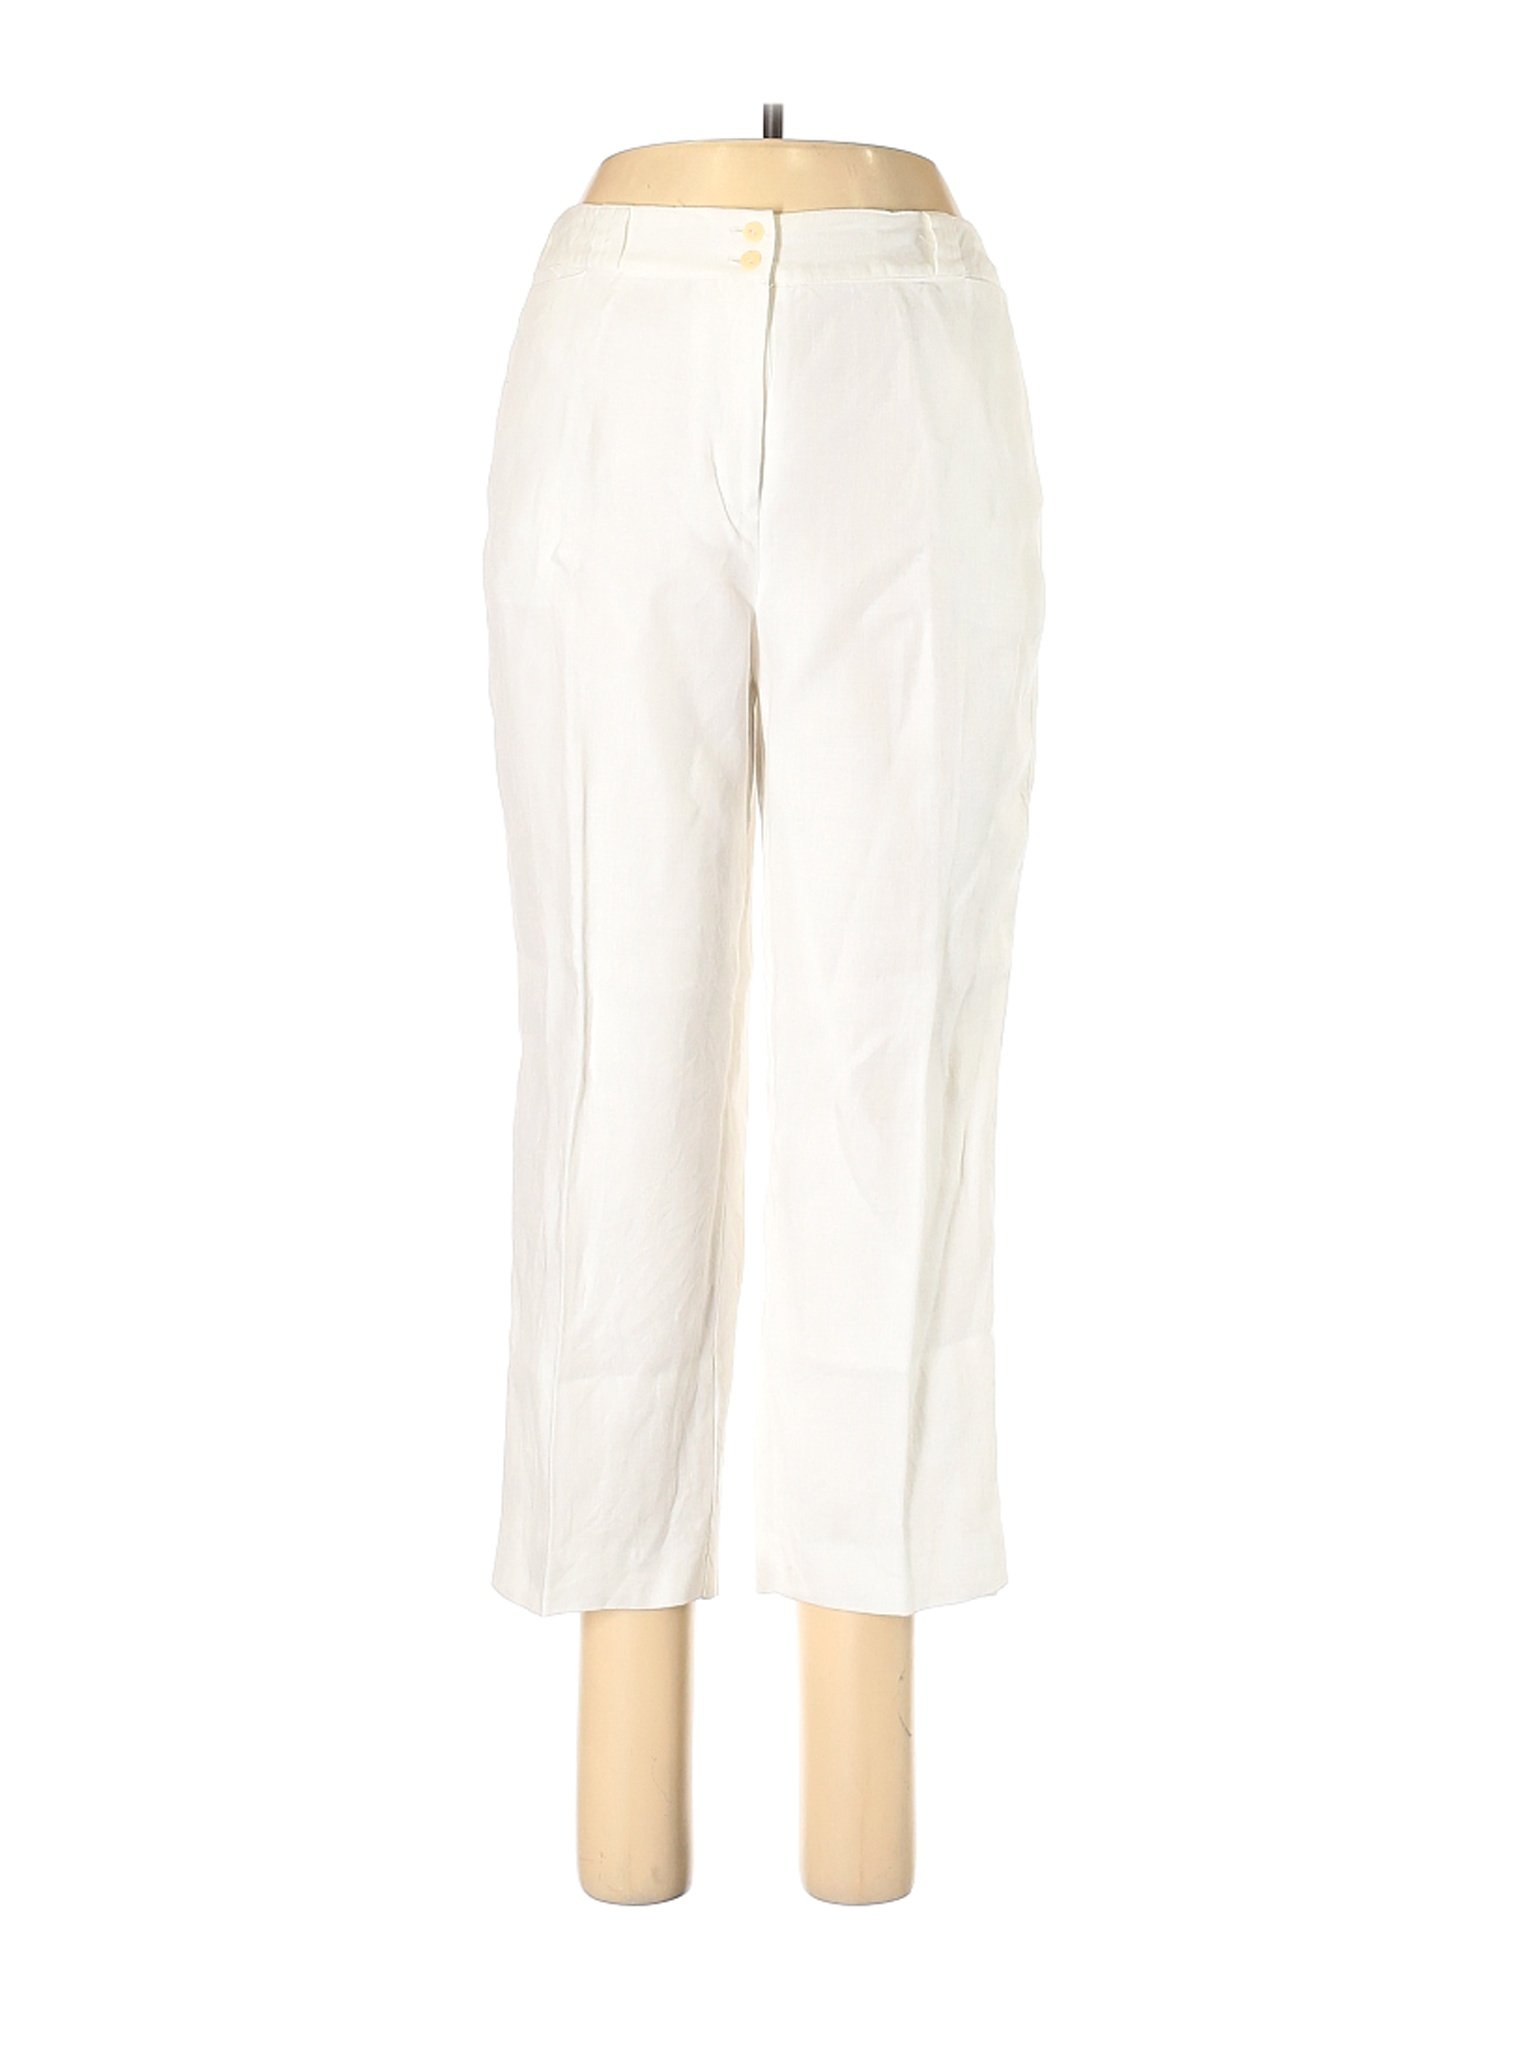 Talbots Women White Linen Pants 12 Petites | eBay